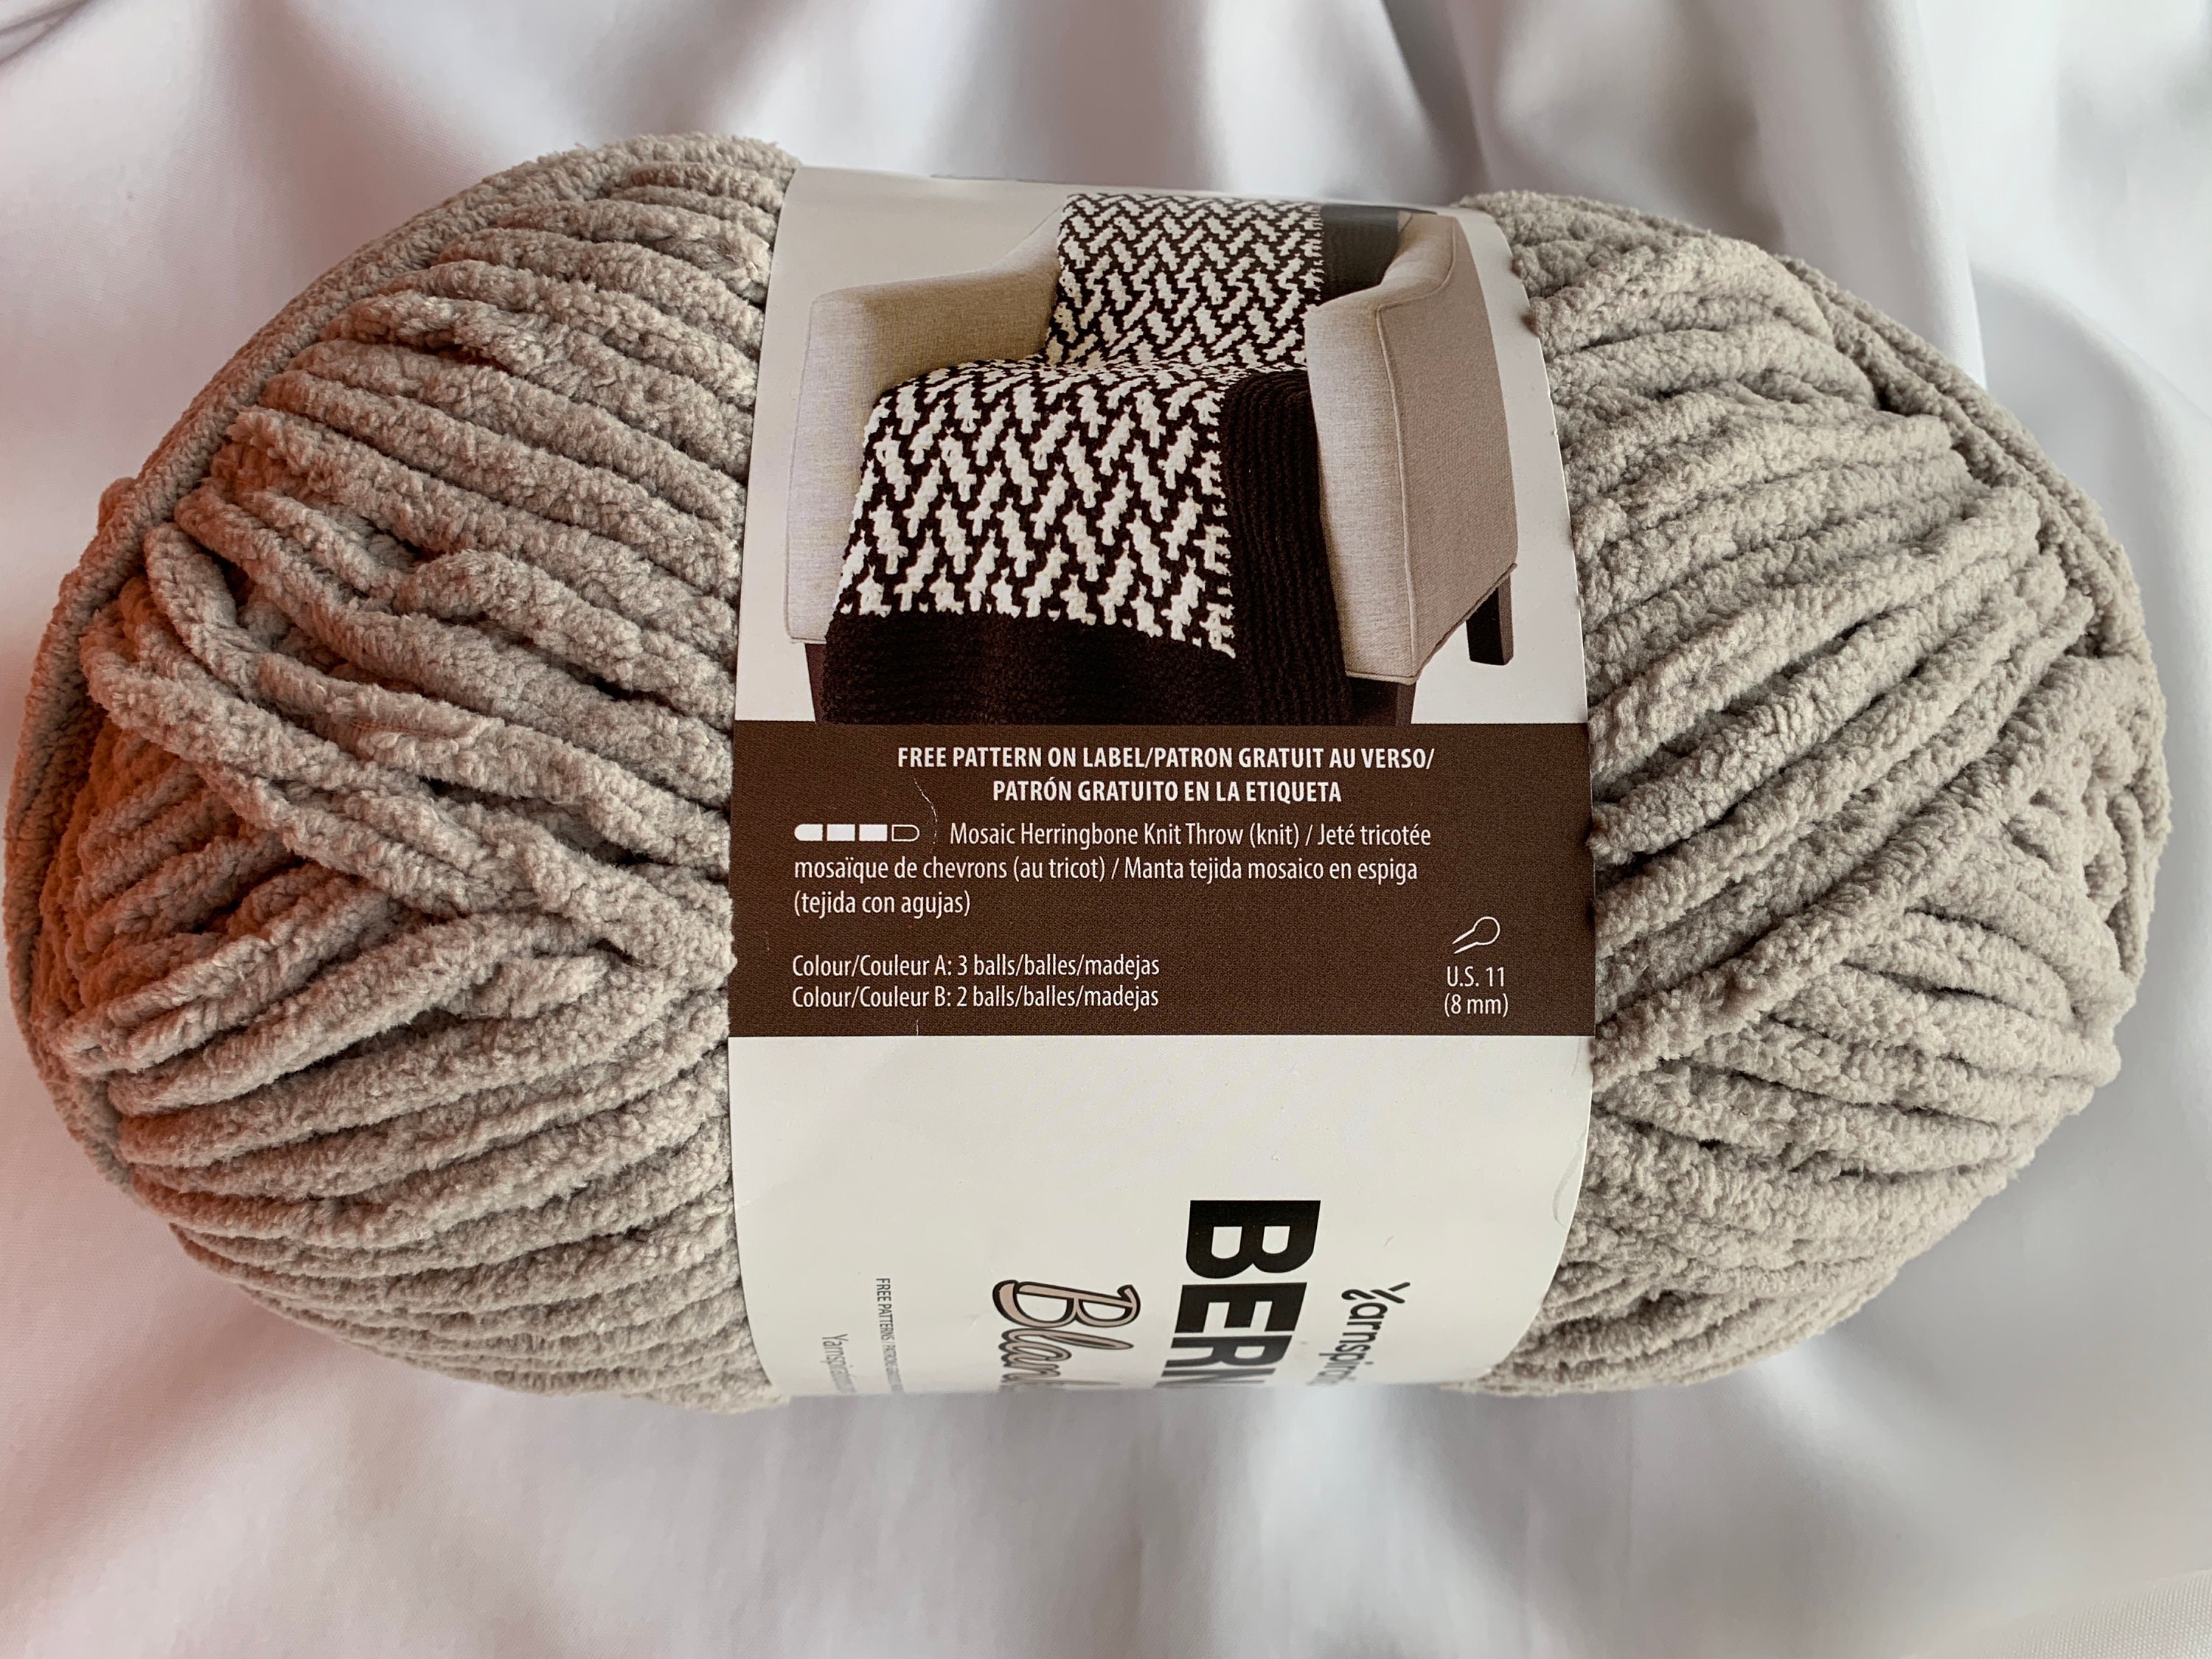 Bernat Blanket #6 Super Bulky Polyester Yarn, South Seas 10.5oz/300g, 220 Yards (4 Pack)